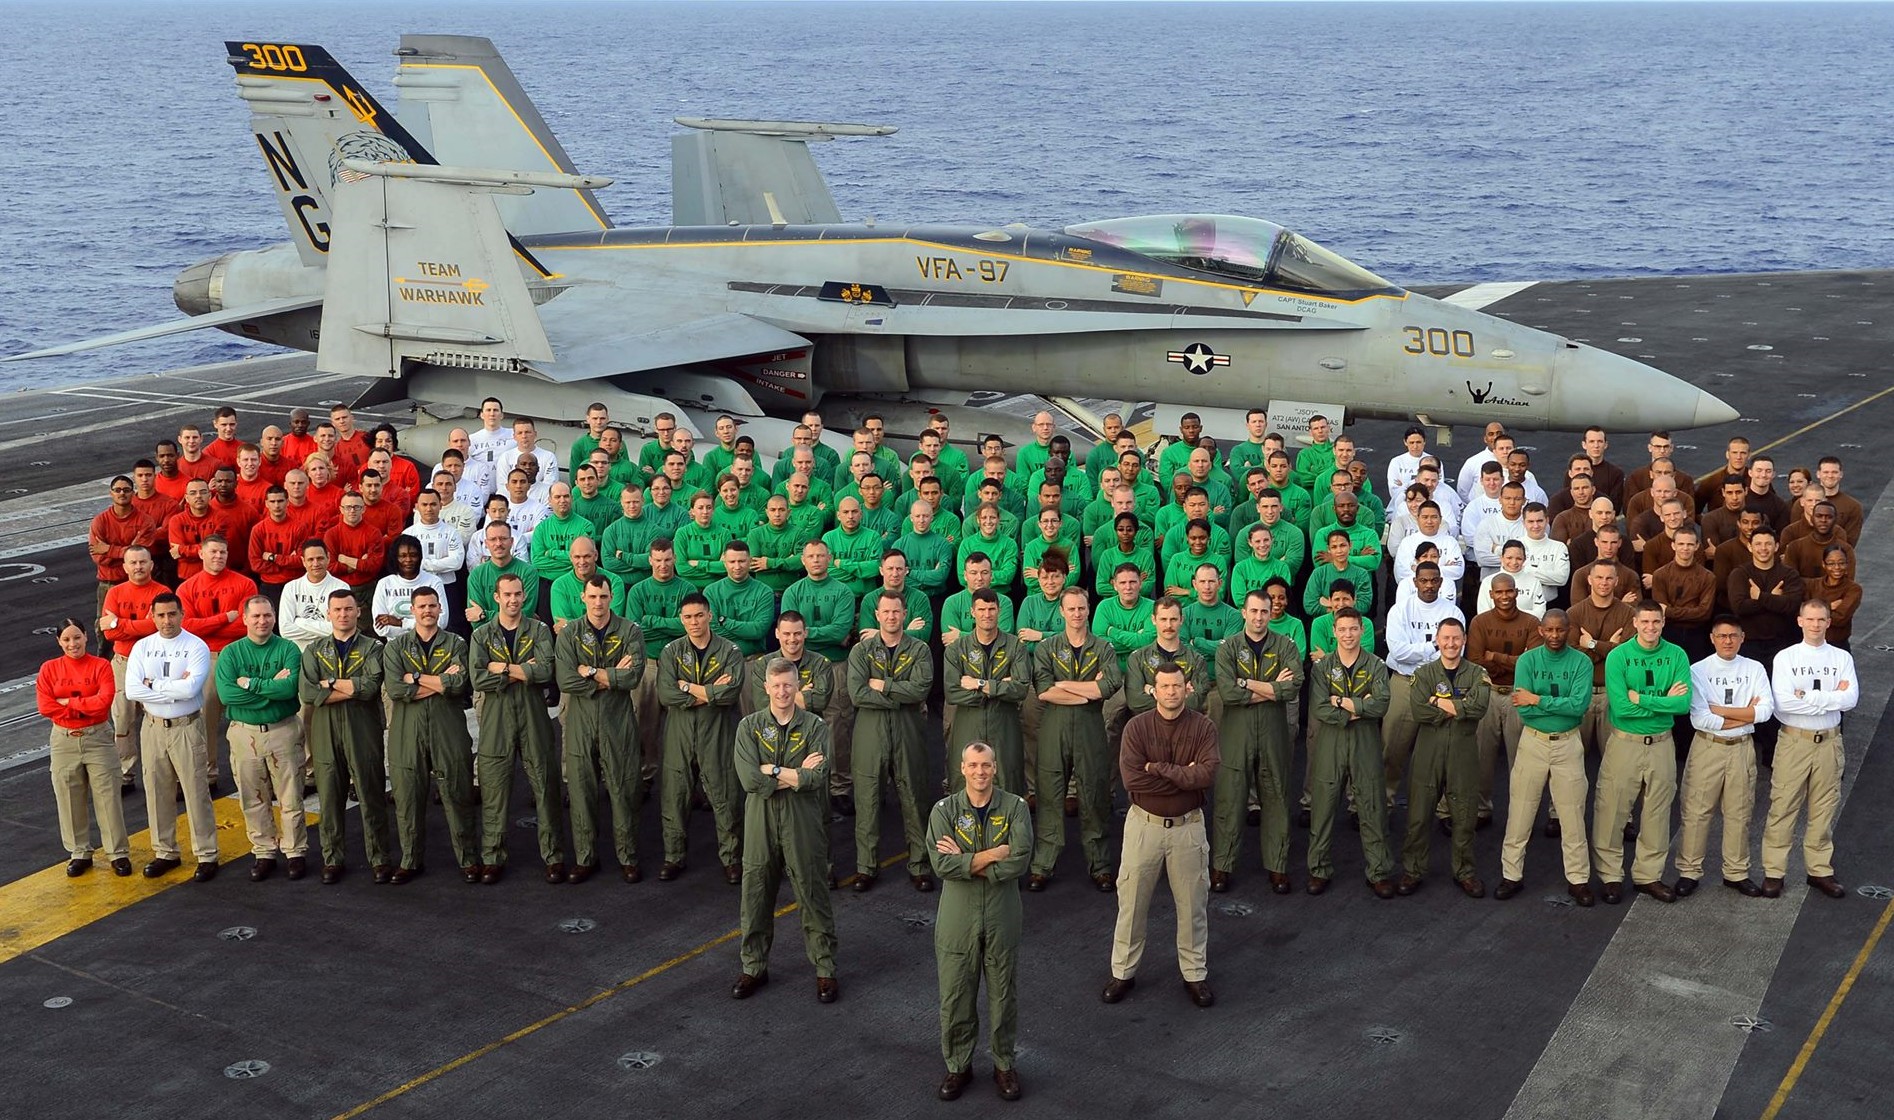 vfa-97 warhawks us navy hornet squadron